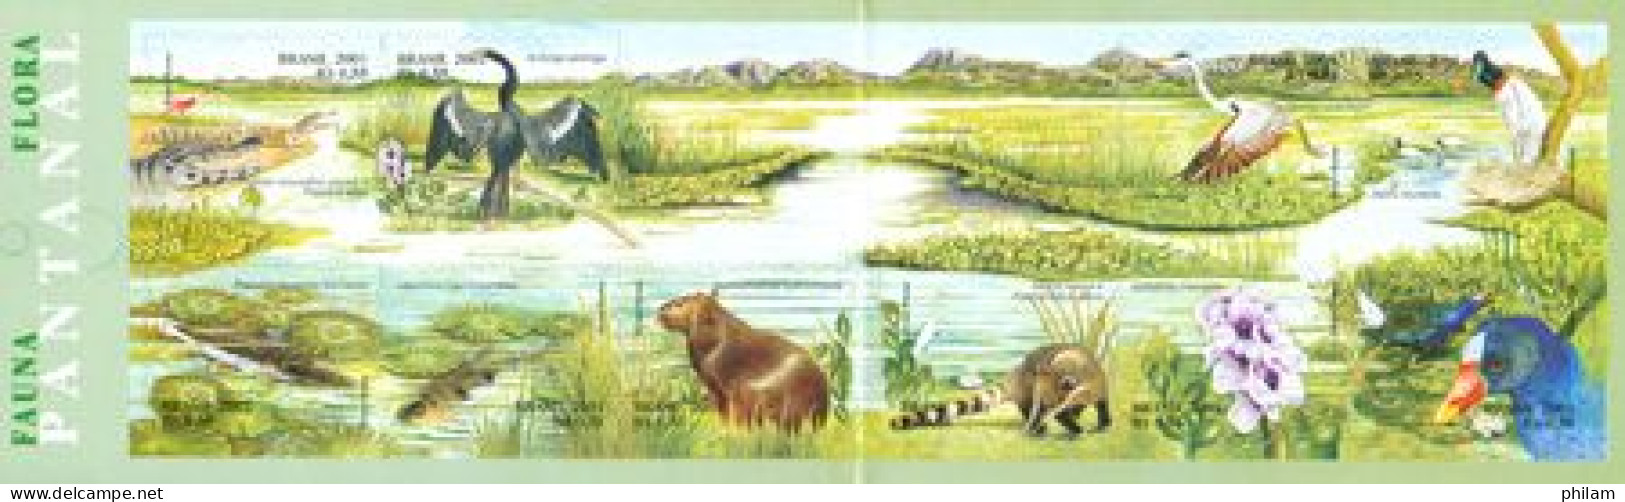 BRESIL - 2001 -  Pantanal - Faune Et Flore Du Brésil - Carnet - Picotenazas & Aves Zancudas